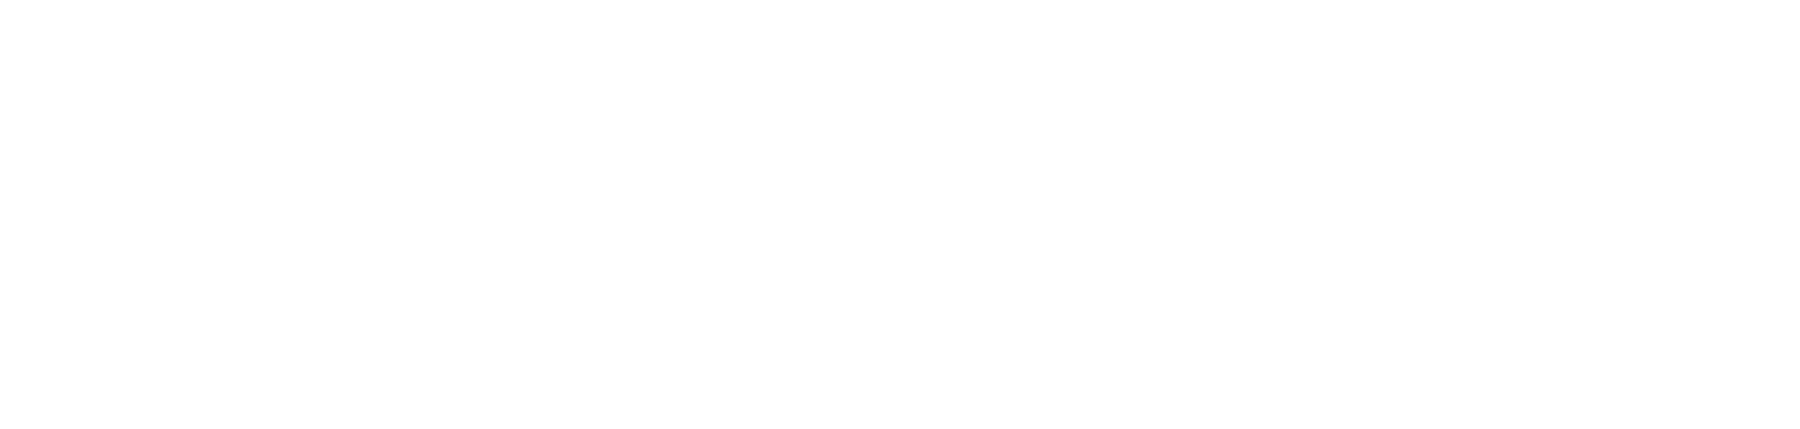 National Treasure, National Disgrace: Savill, Harris & Hall logo